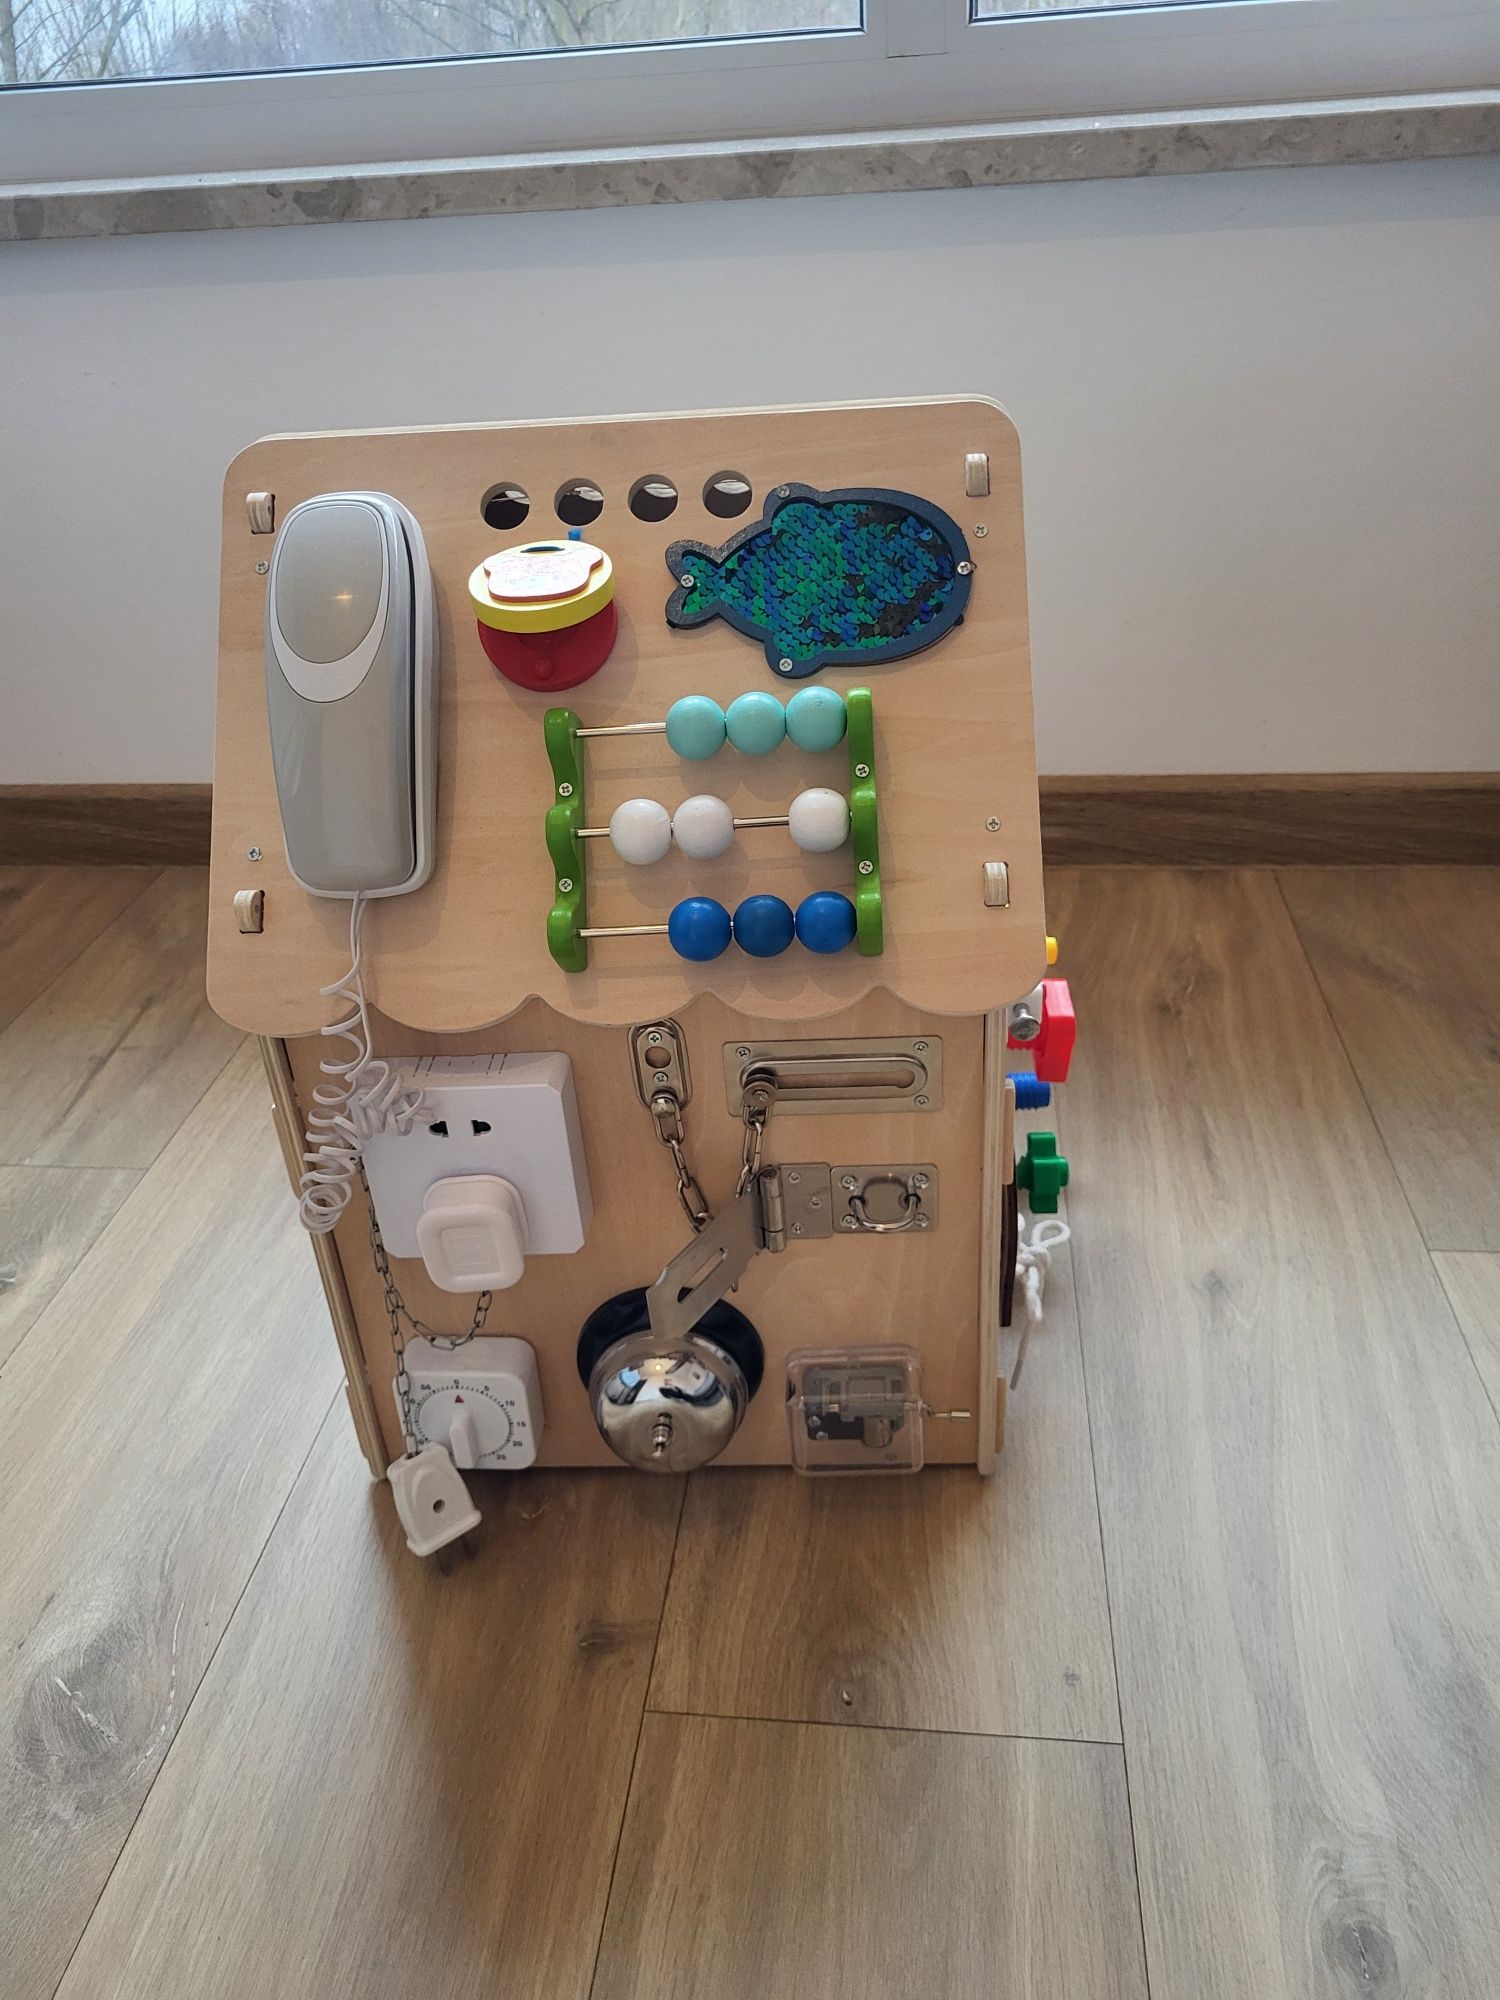 Zabawka sensoryczna drewniany domek sensoryczny zabawka dla malucha mo